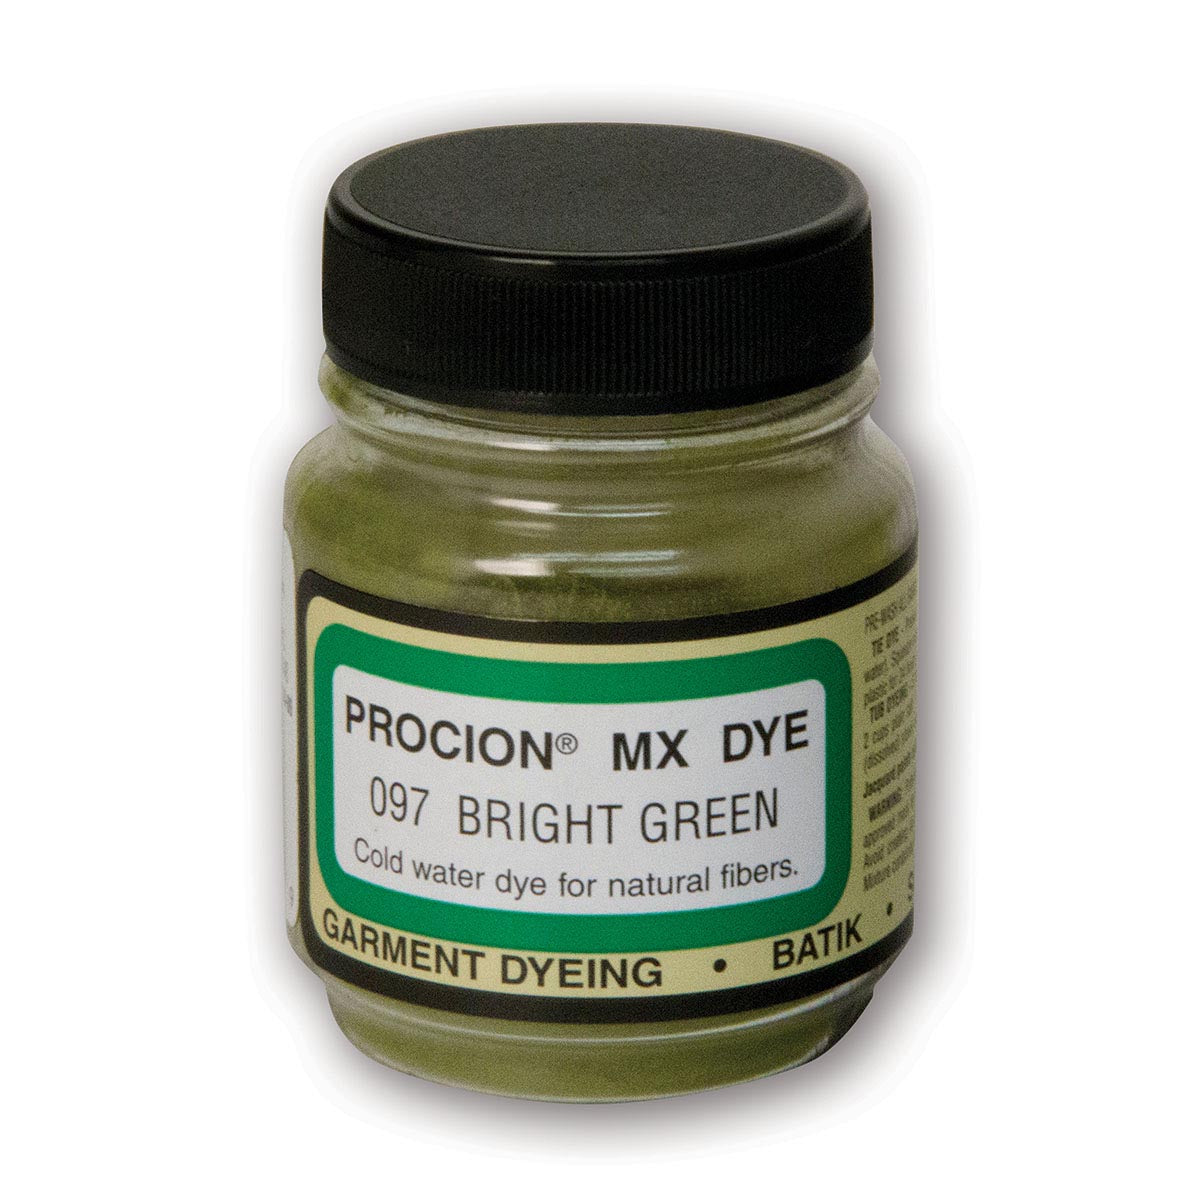 Jacquard - Procion MX Dye - Fabric Textile - Bright Green 097